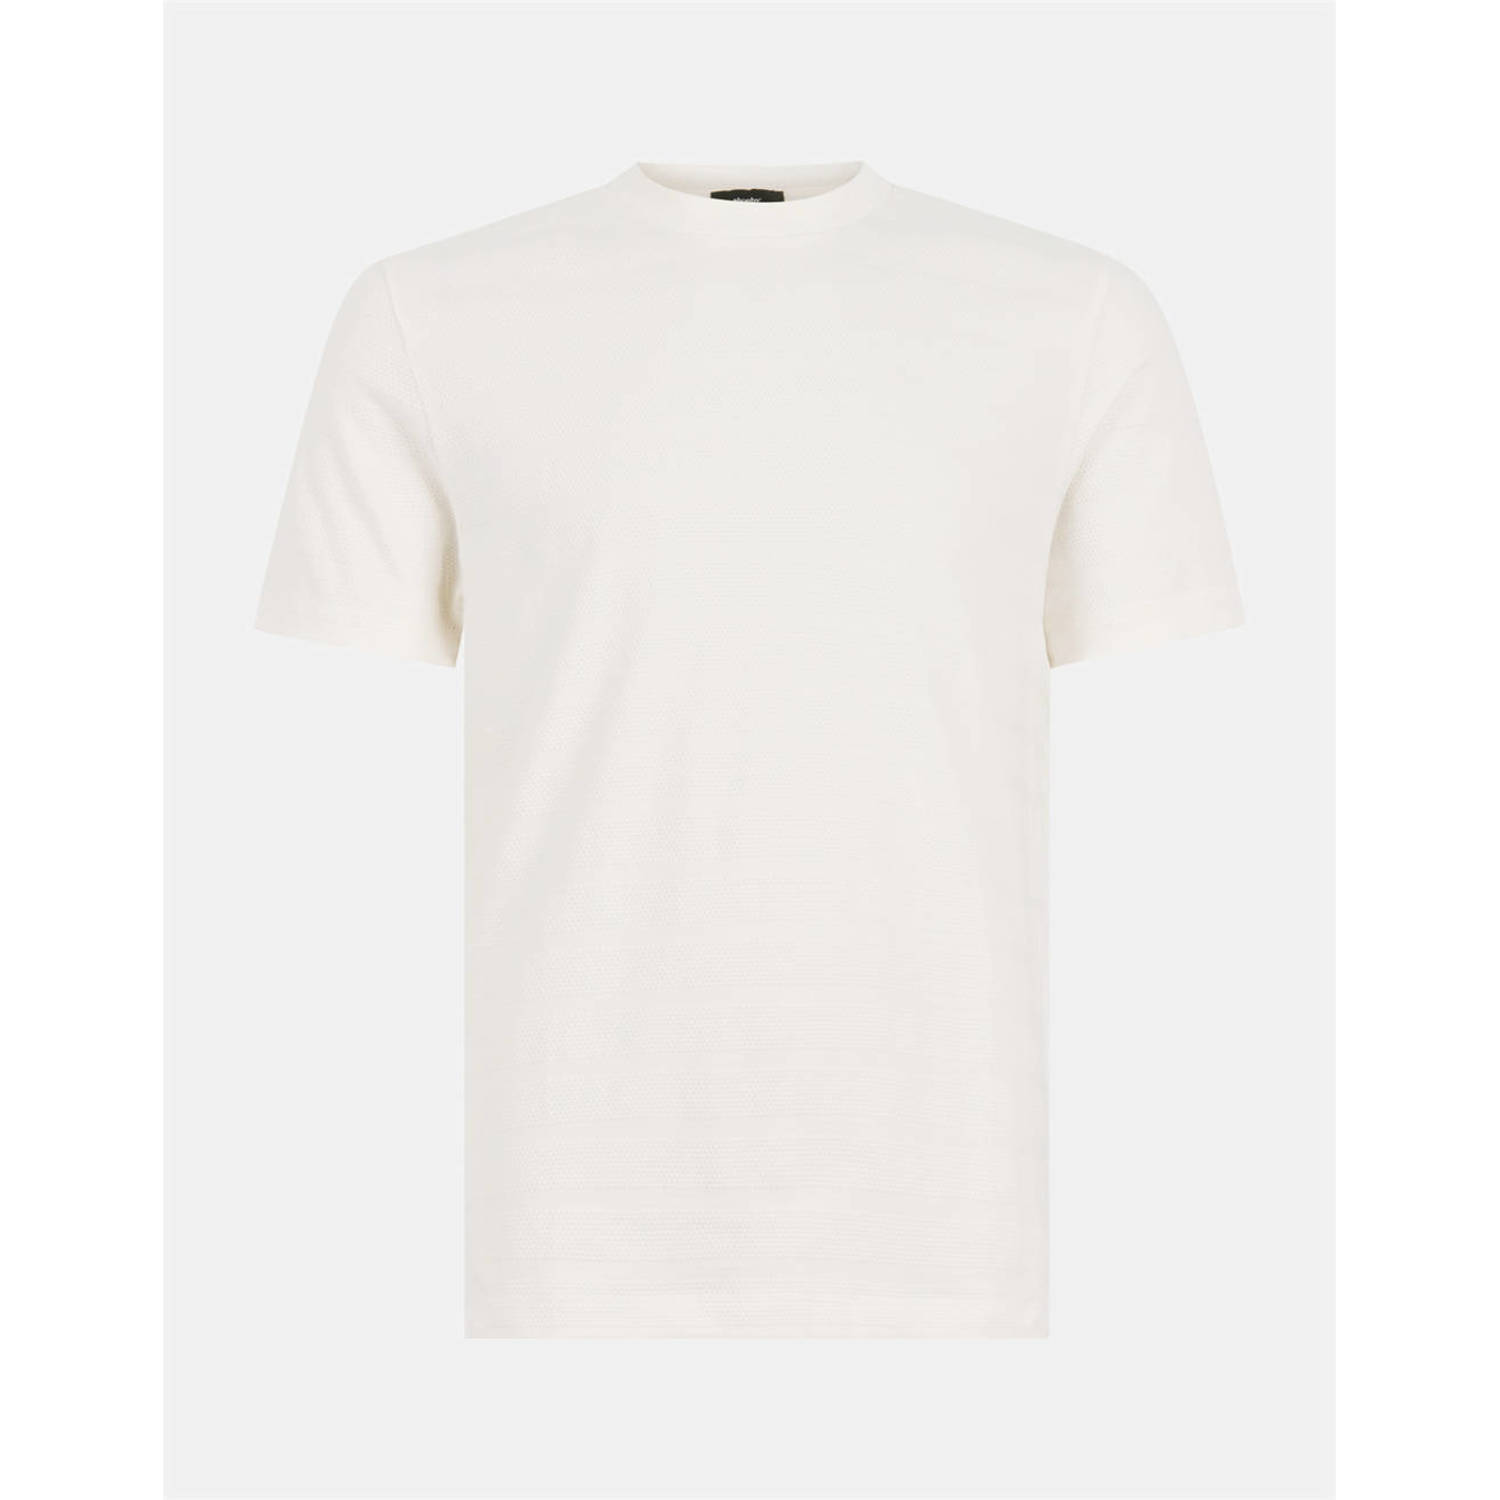 Shoeby gestreept T-shirt wit